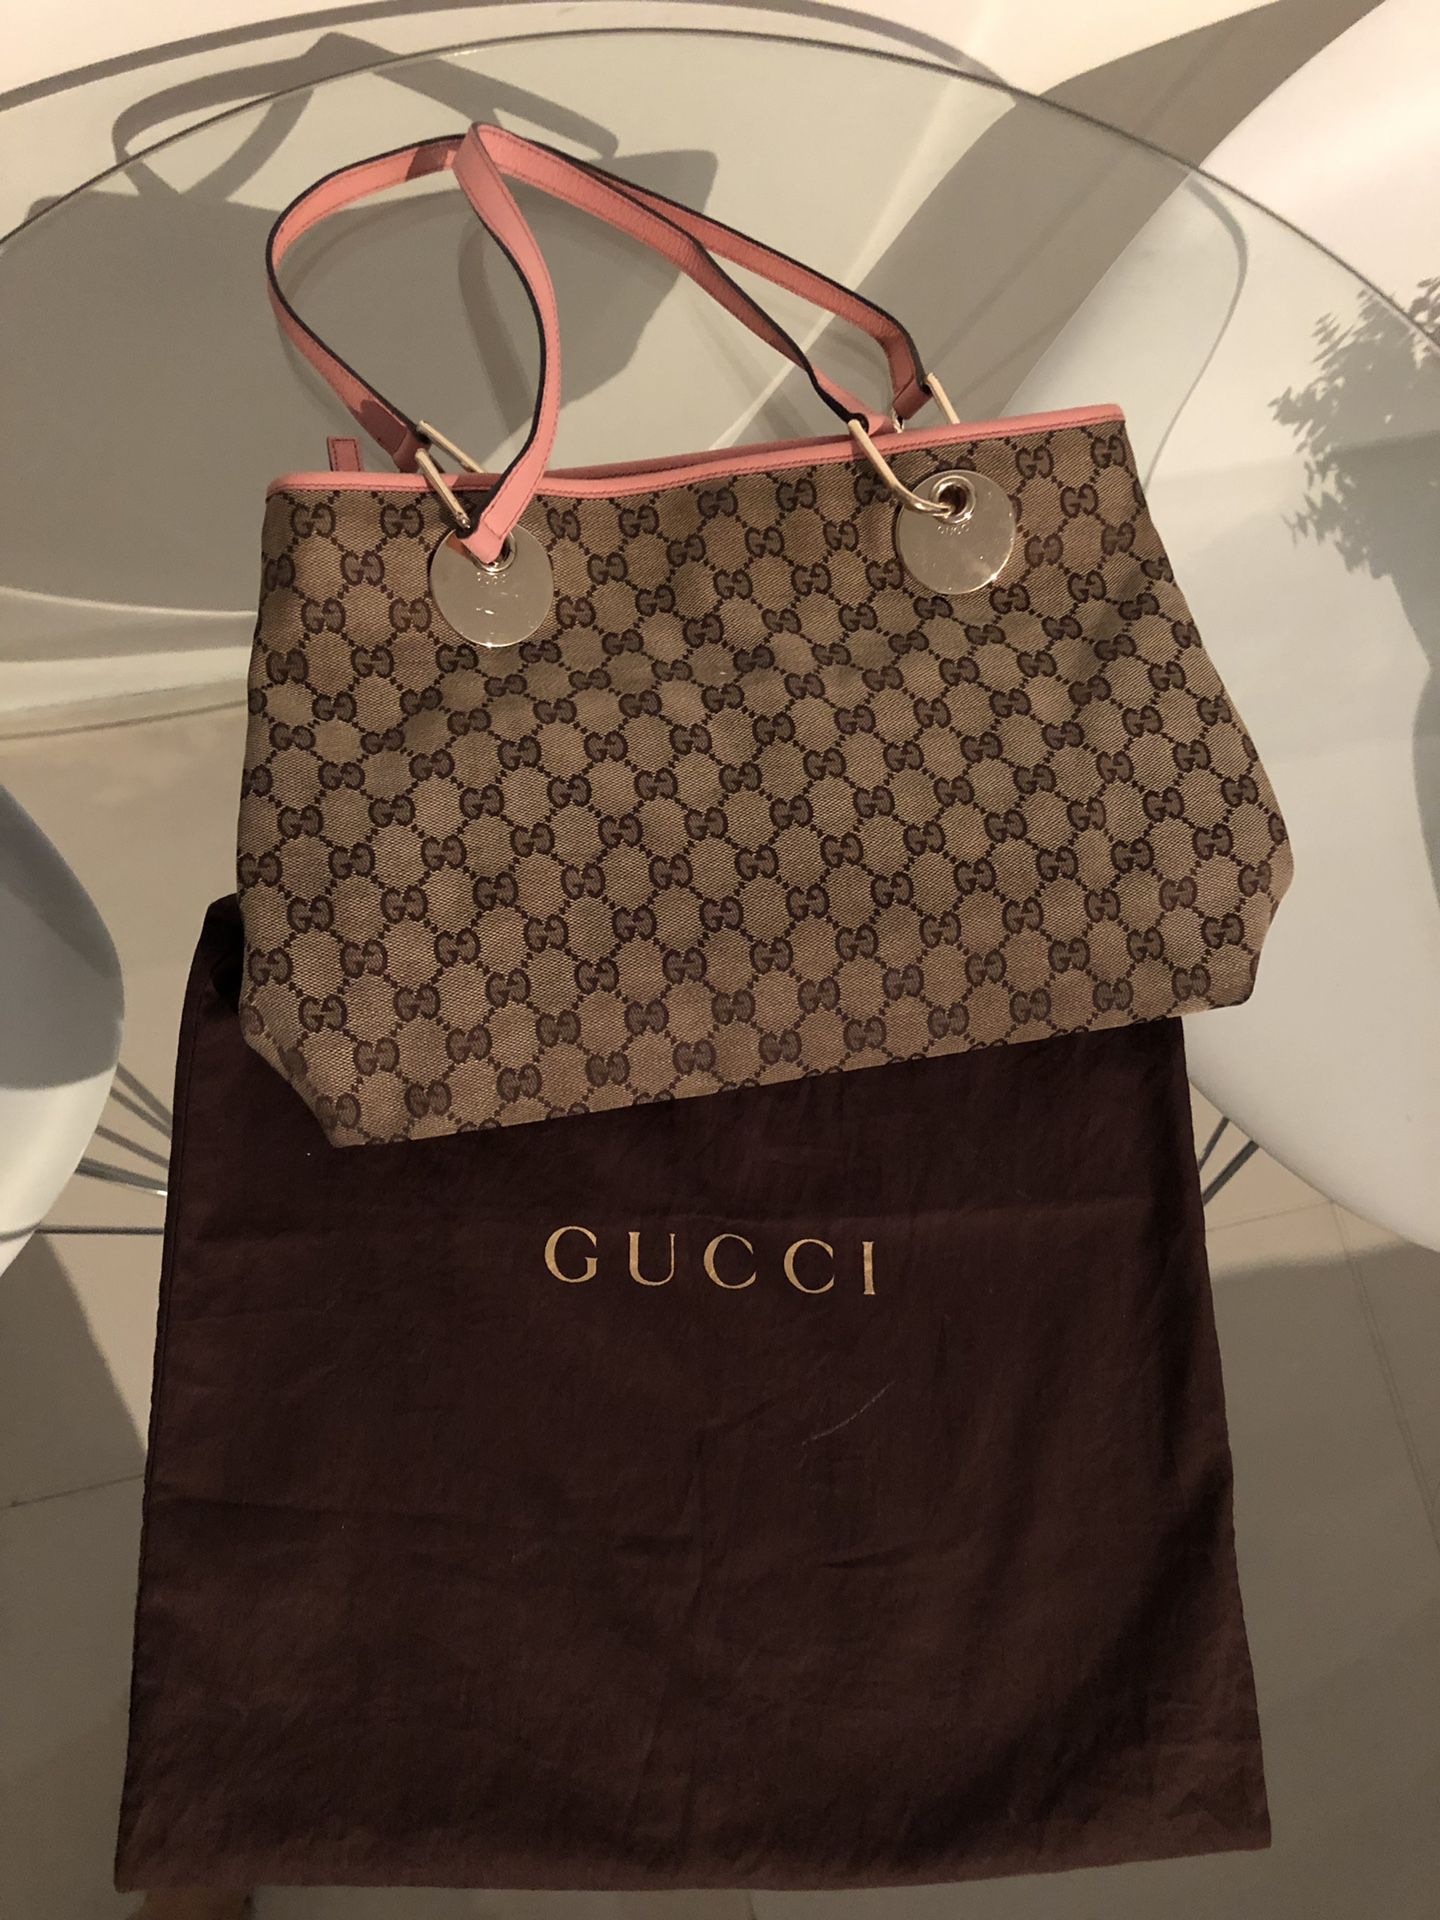 Gucci Tote Bag - Authentic